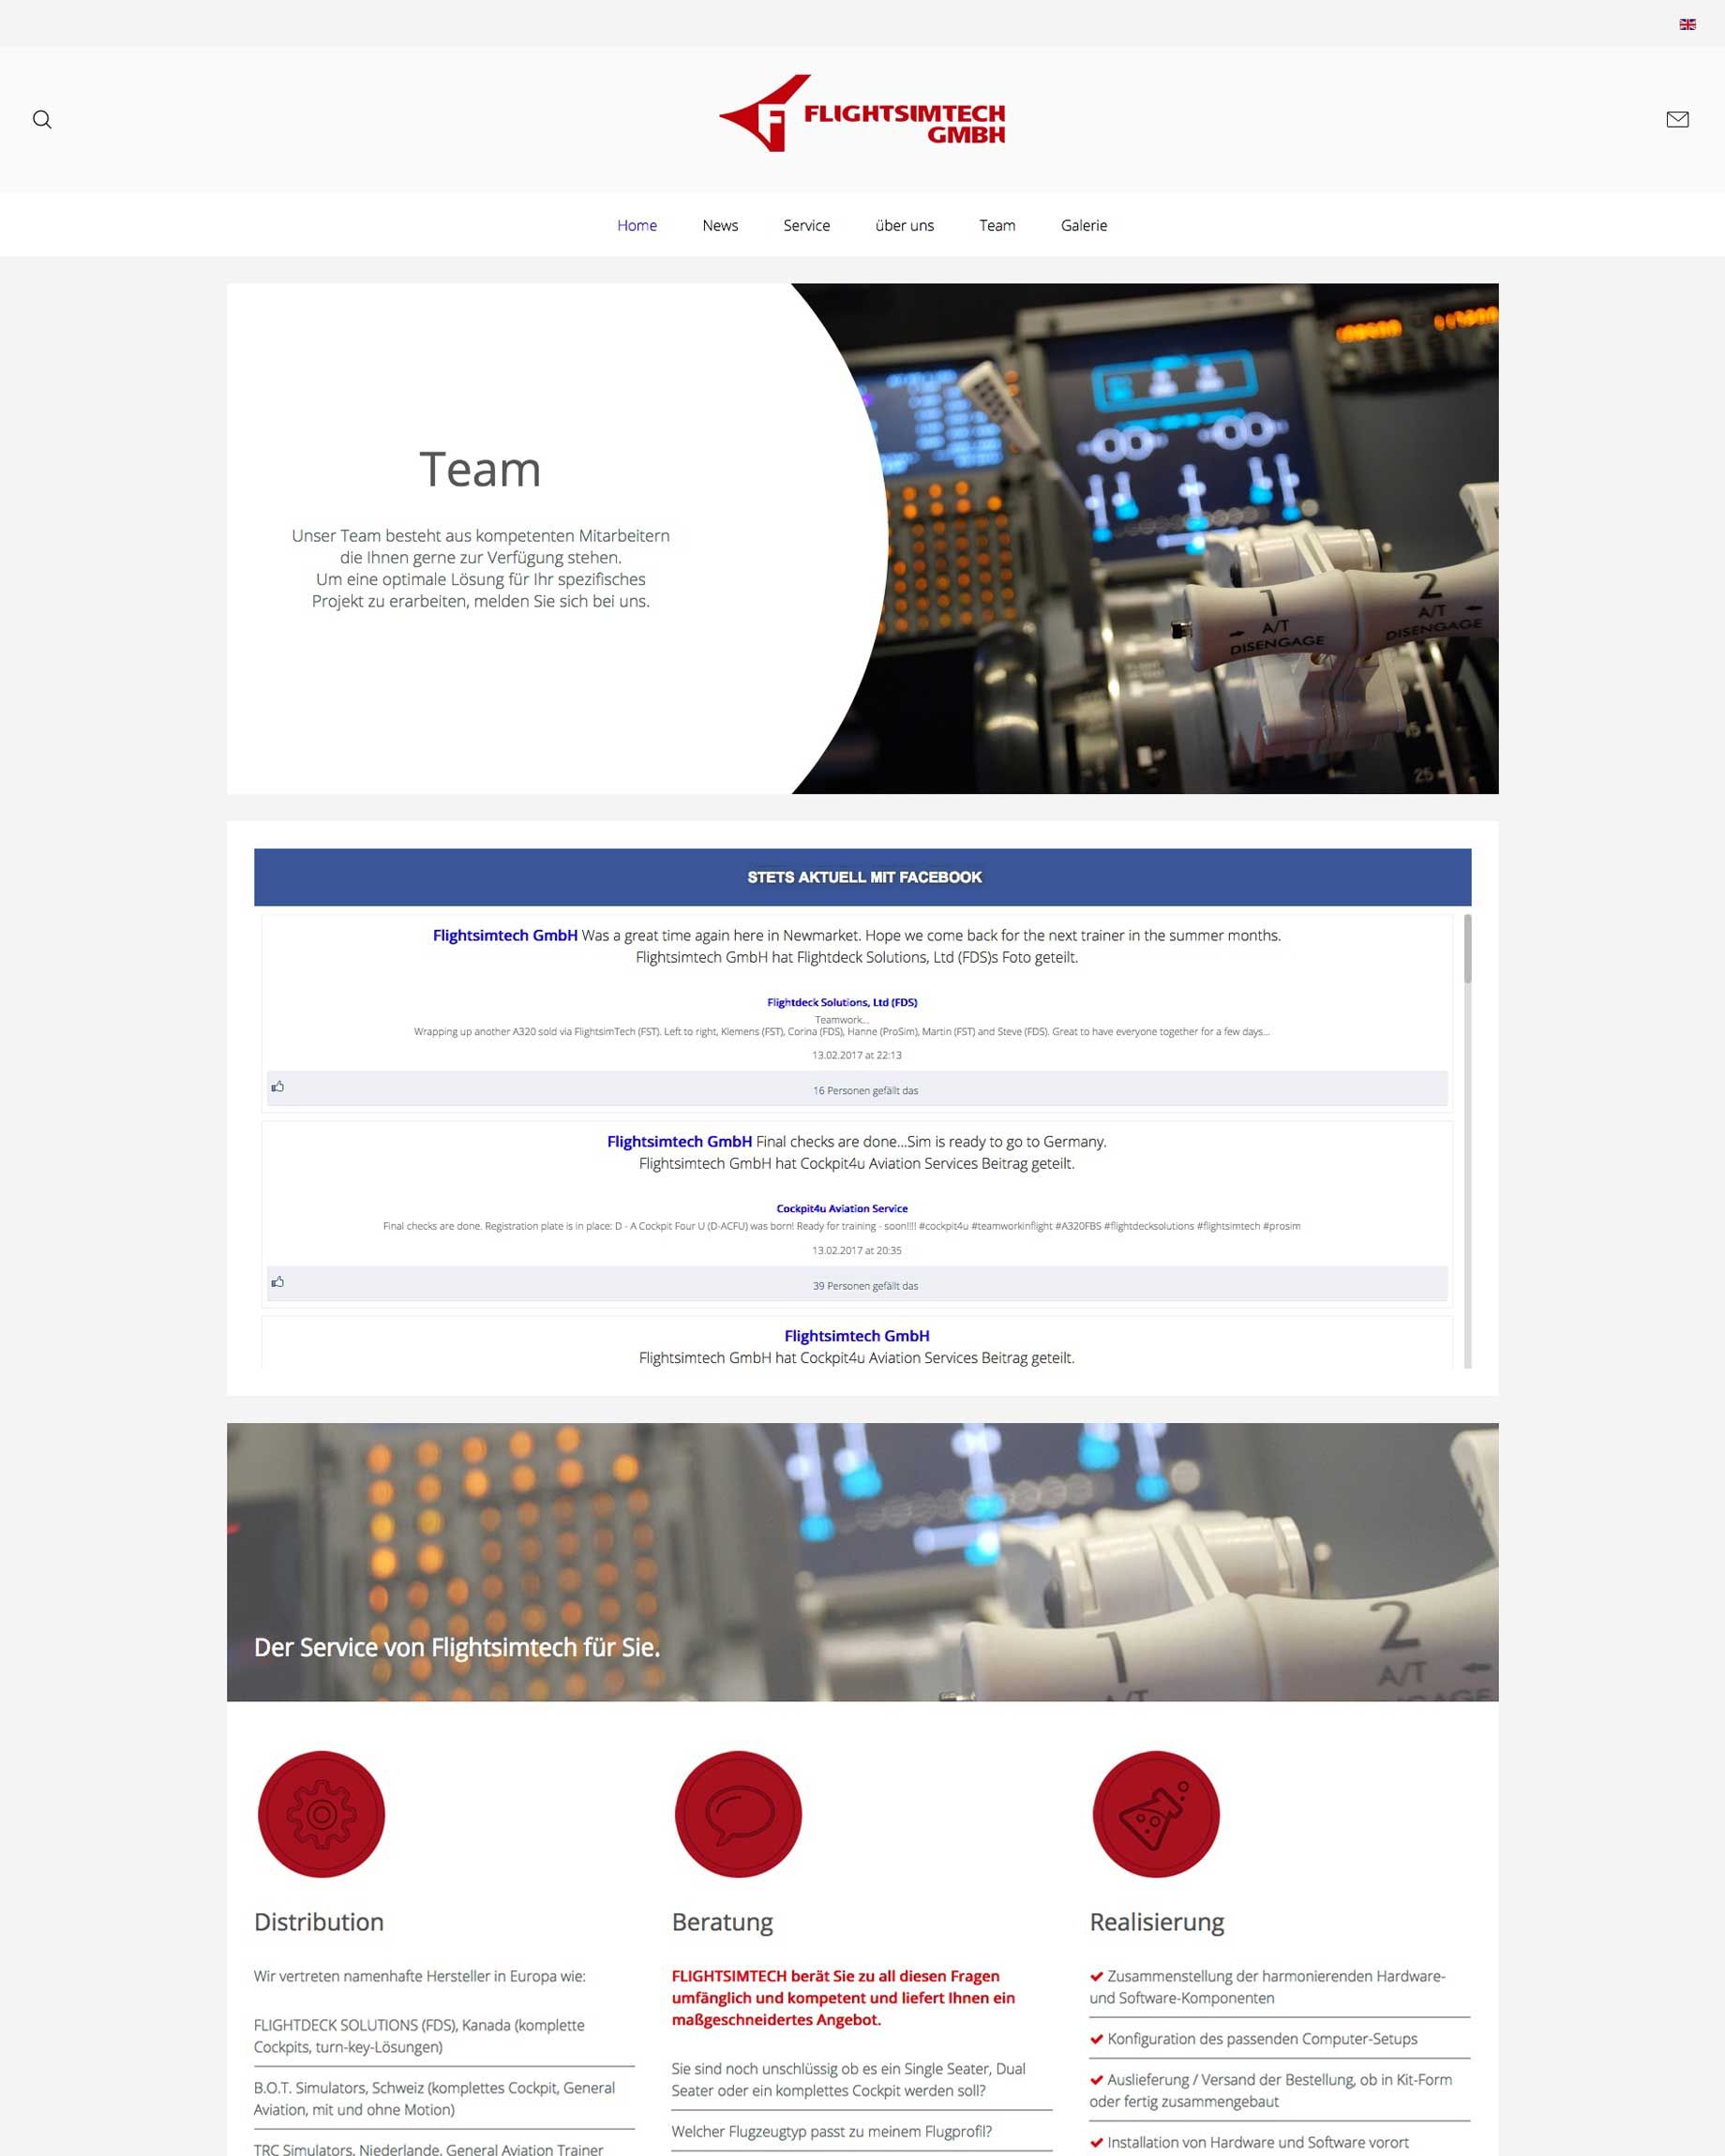 Homepage Professionell + Flightsimtech GmbH